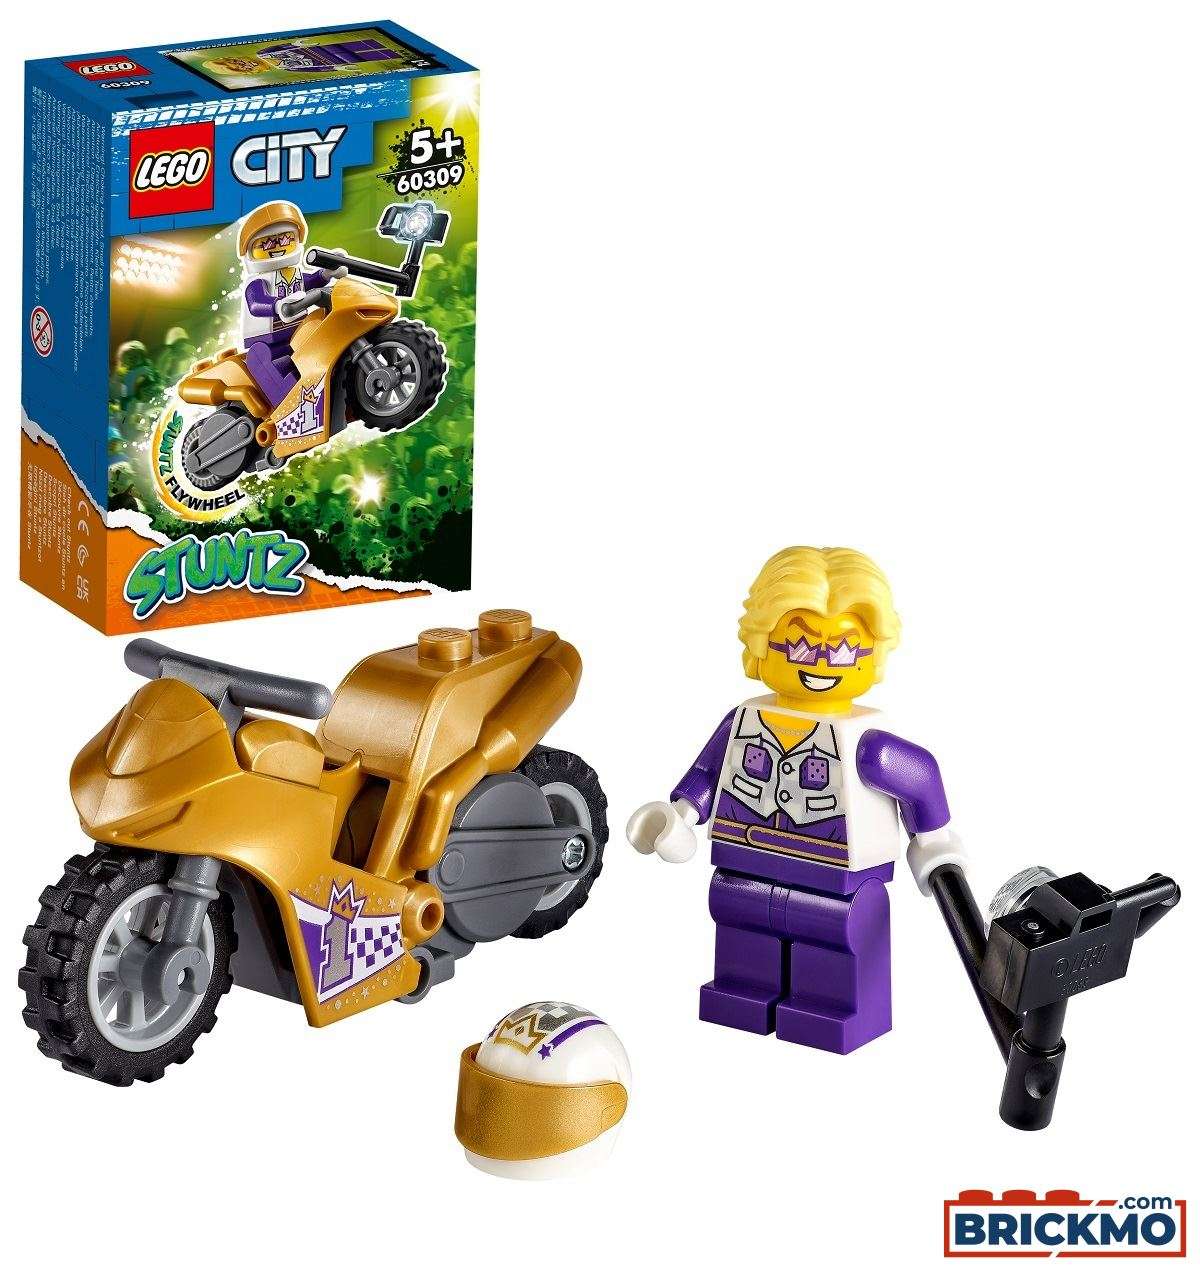 LEGO City 60309 Selfie-Stuntbike 60309